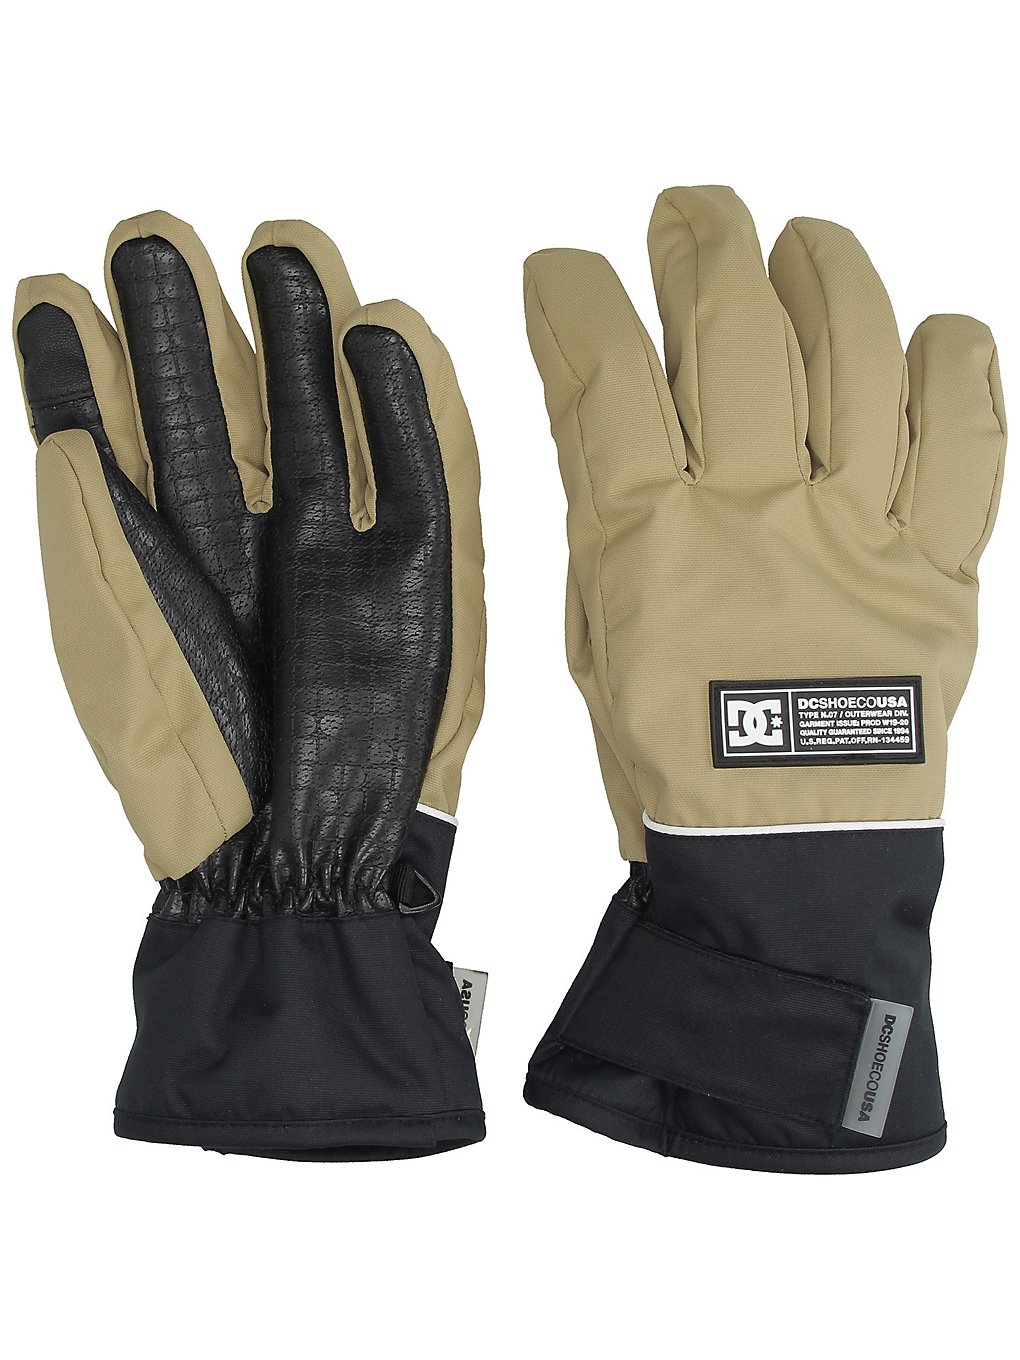 DC Franchise Gloves marron